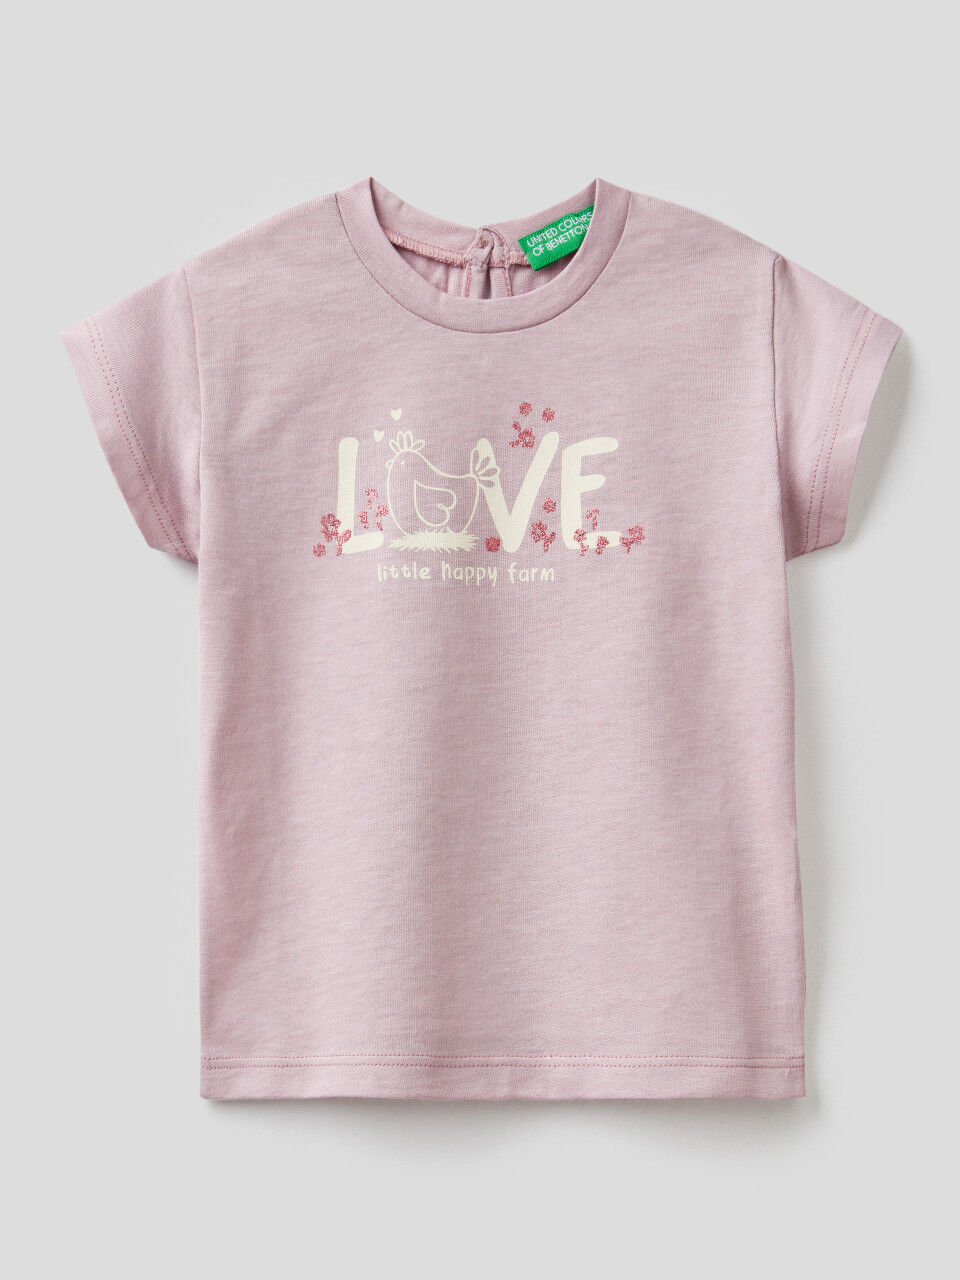 Girls Heart Multi Colour Sequins Patch Tee Shirt